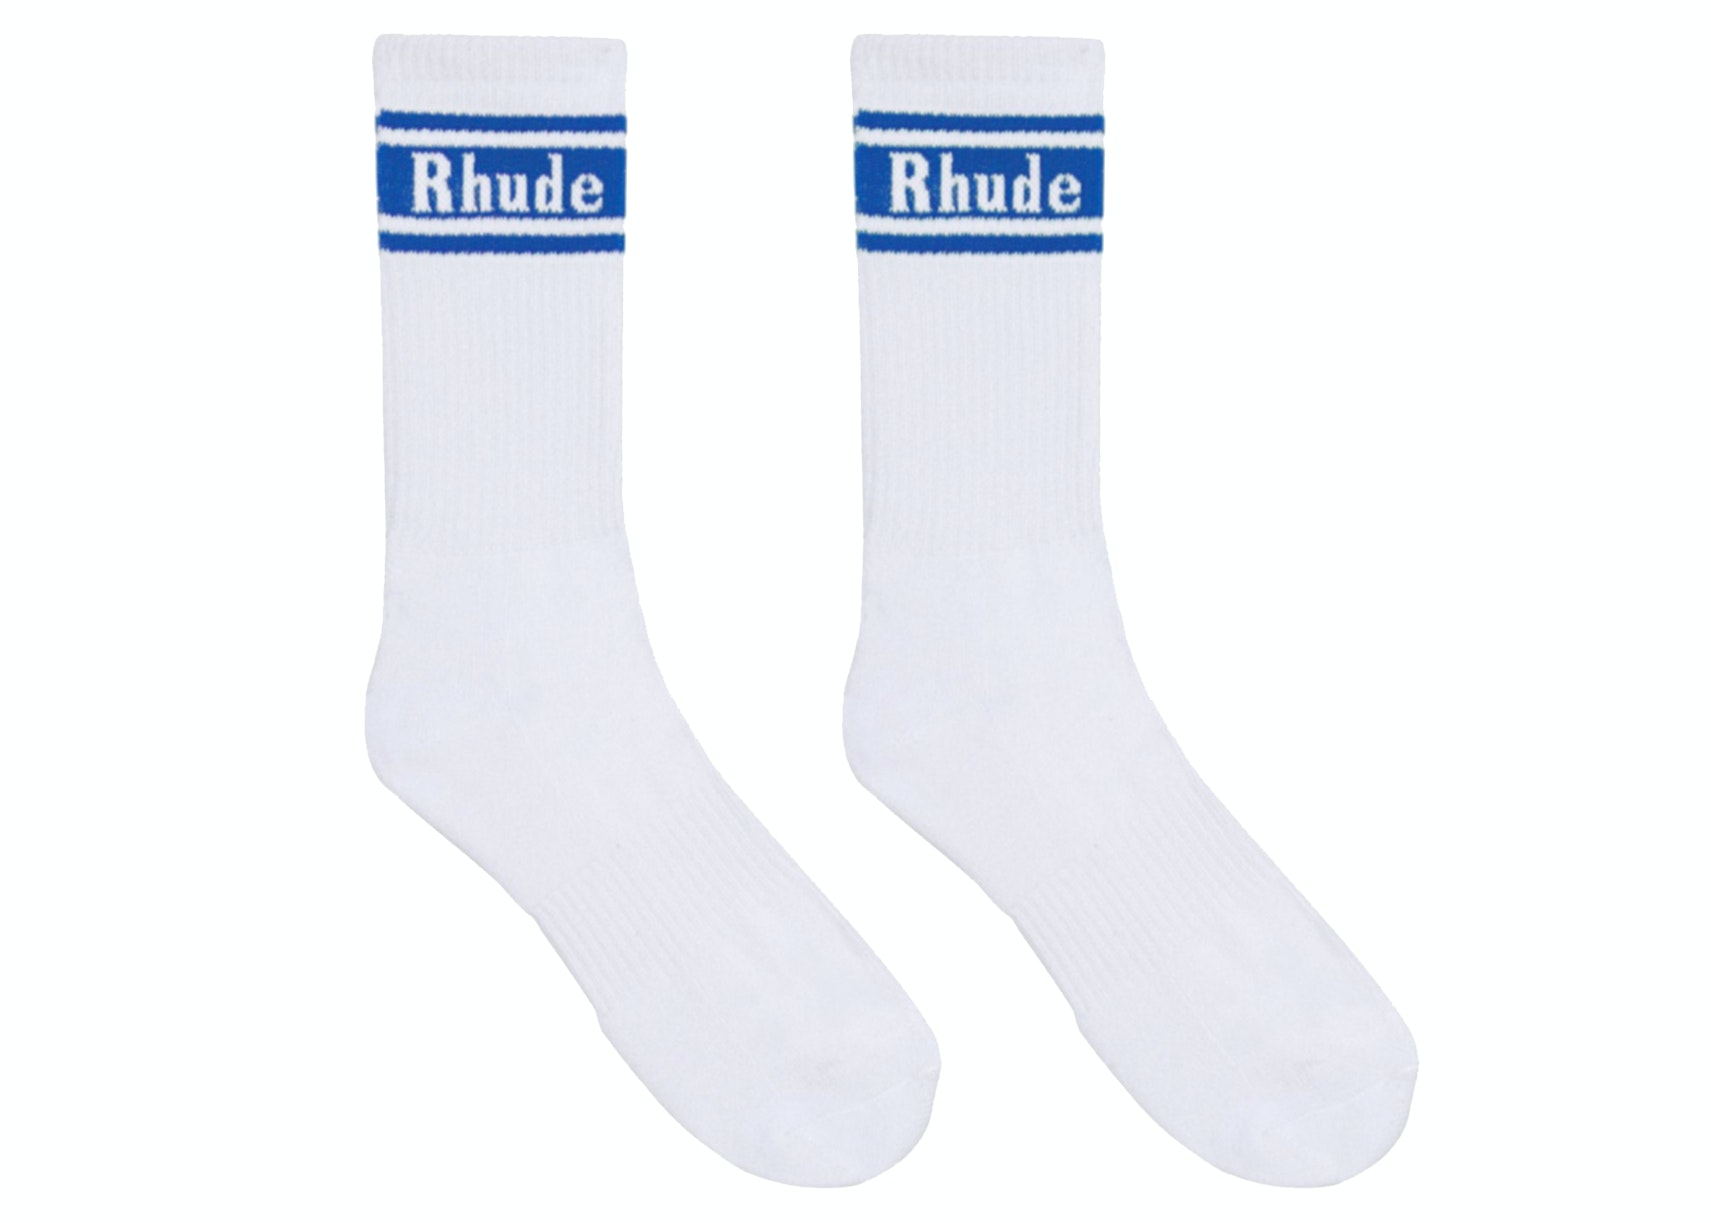 https://d2cva83hdk3bwc.cloudfront.net/rhude-stripe-logo-socks-white-blue-1.jpg